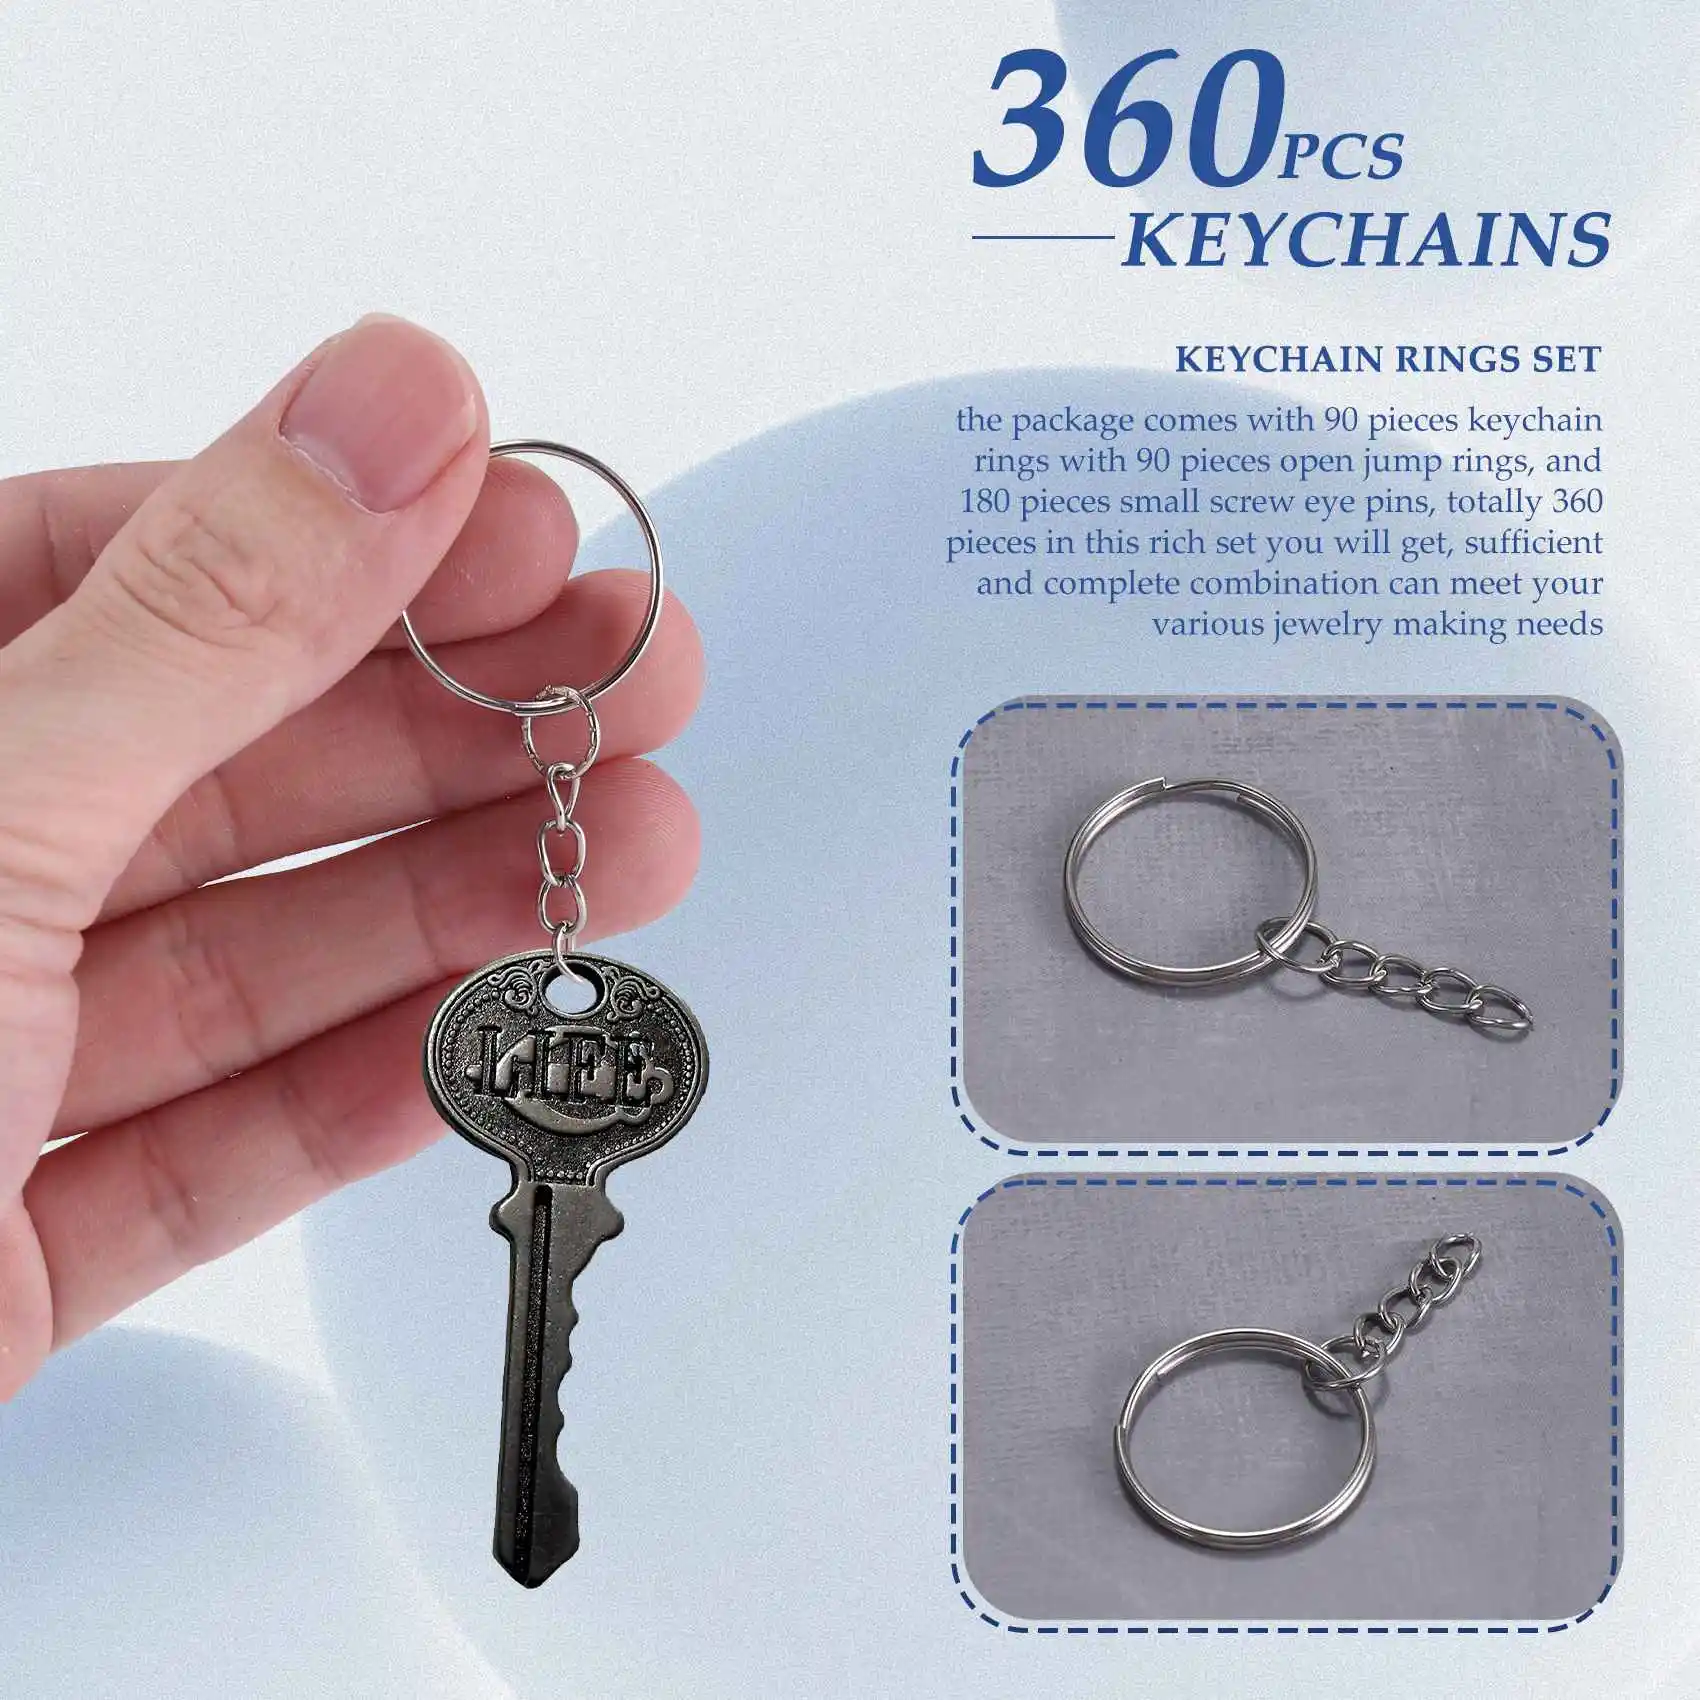 360 keys